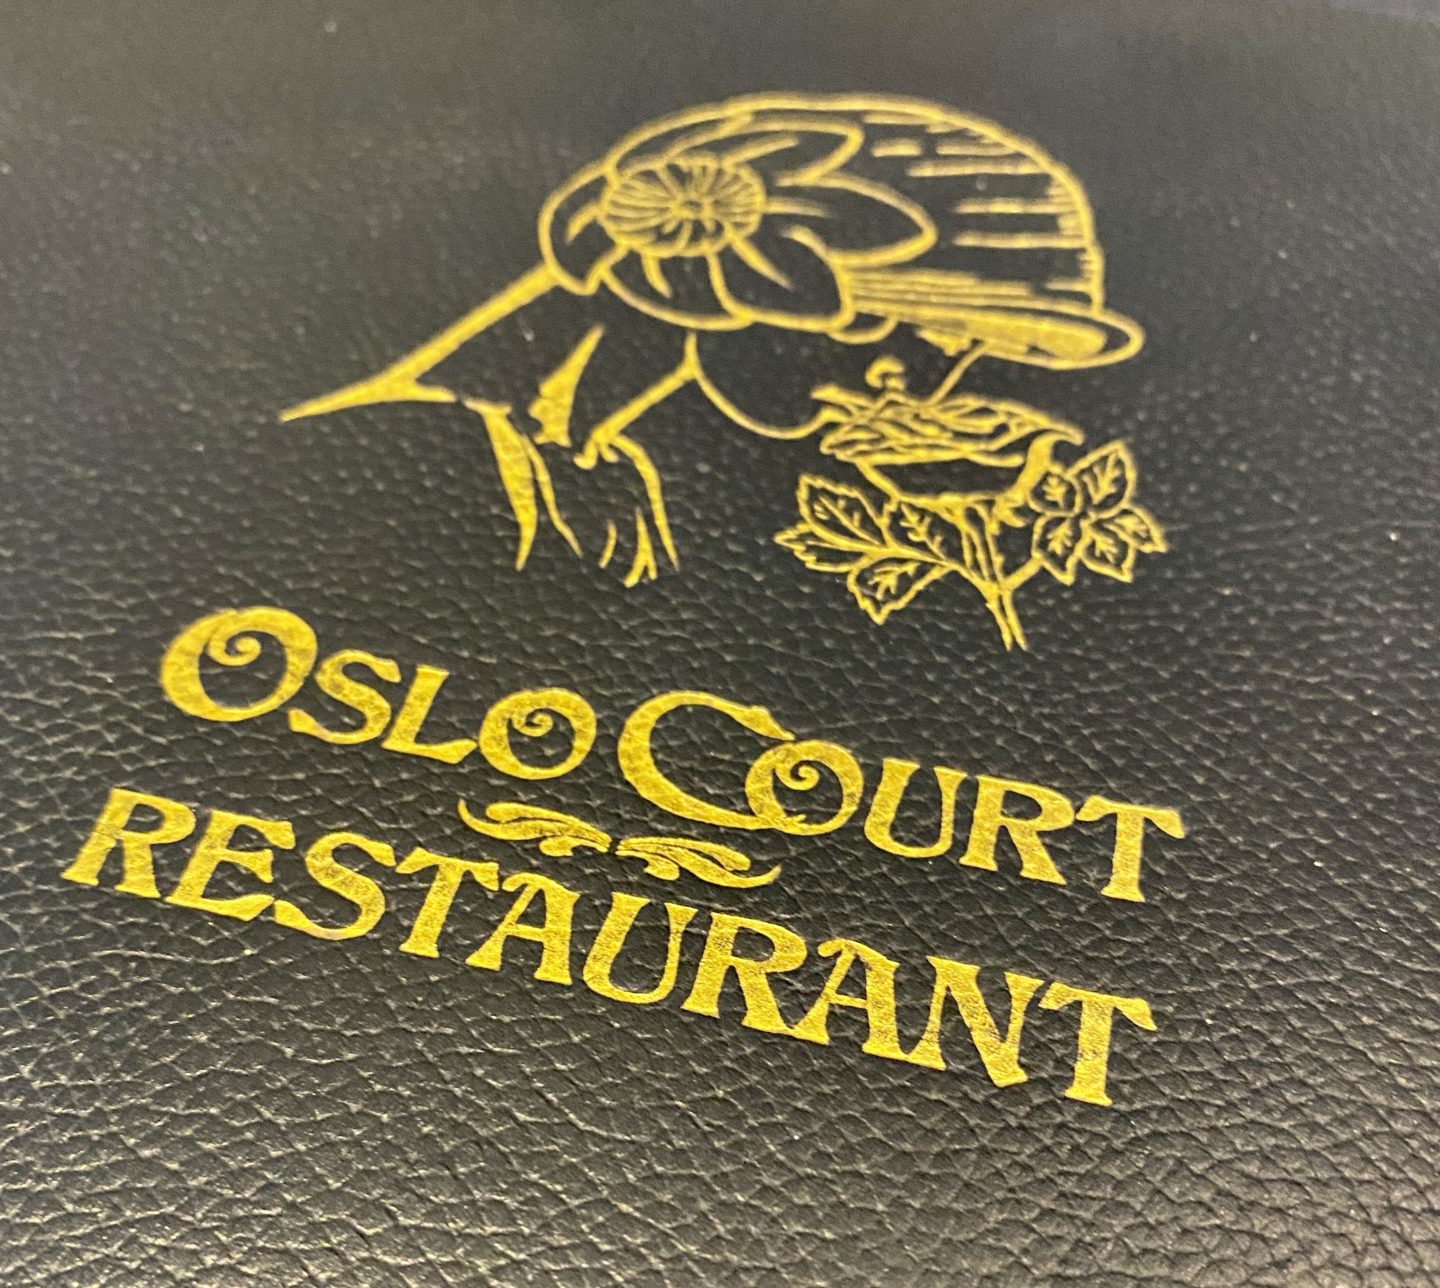 Oslo court London 